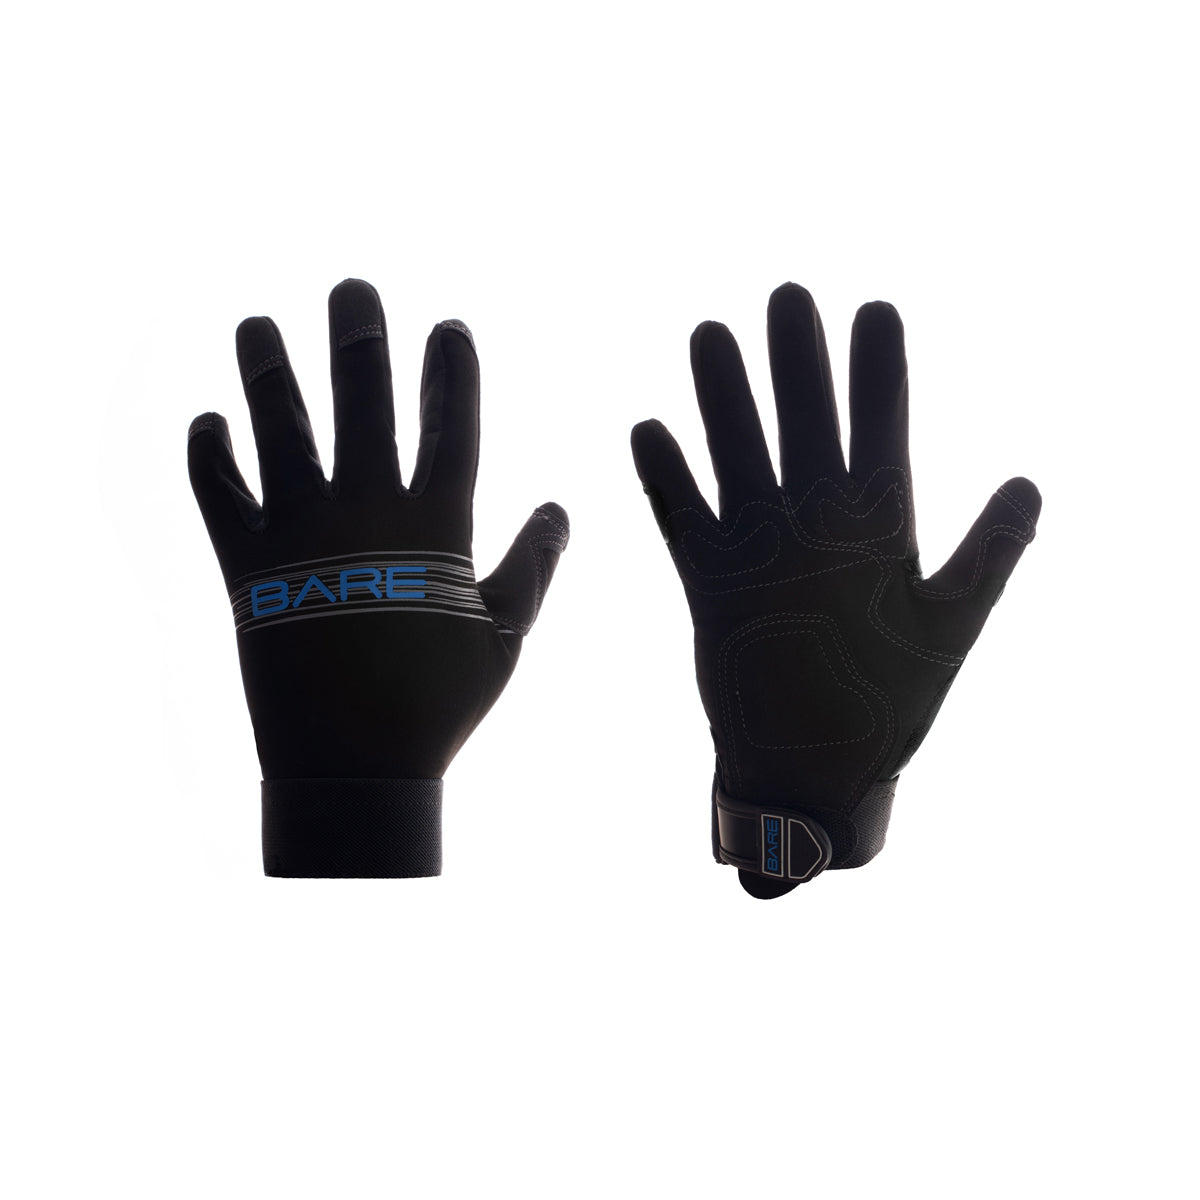 Open Box Bare 2mm Tropic Pro Dive Gloves